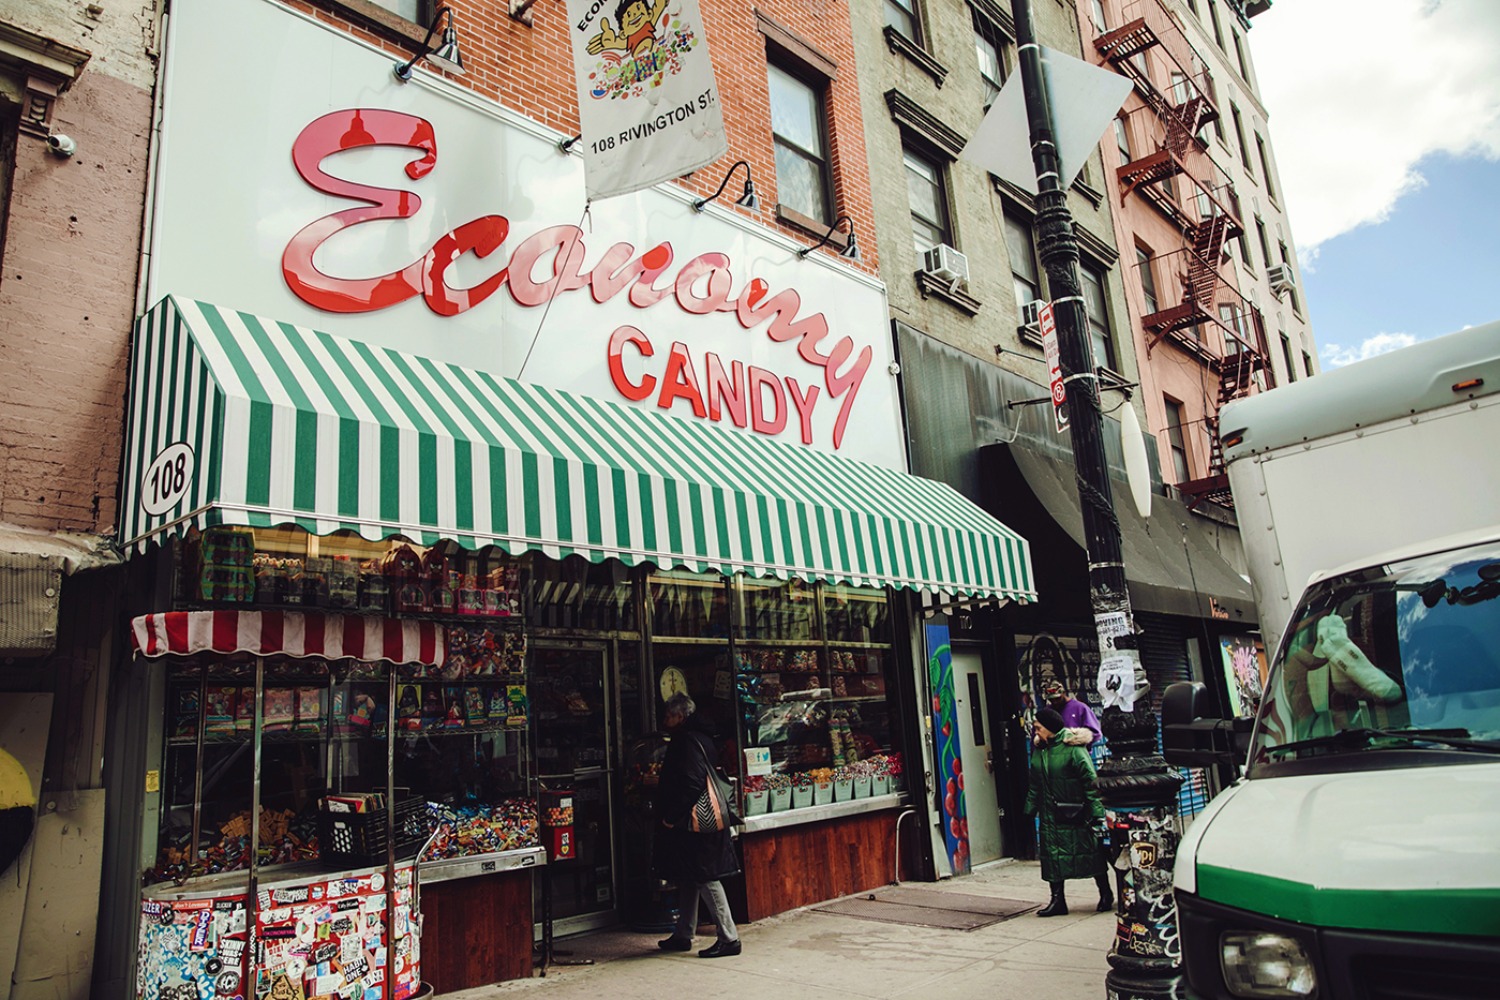 NYCs Economy Candy Store